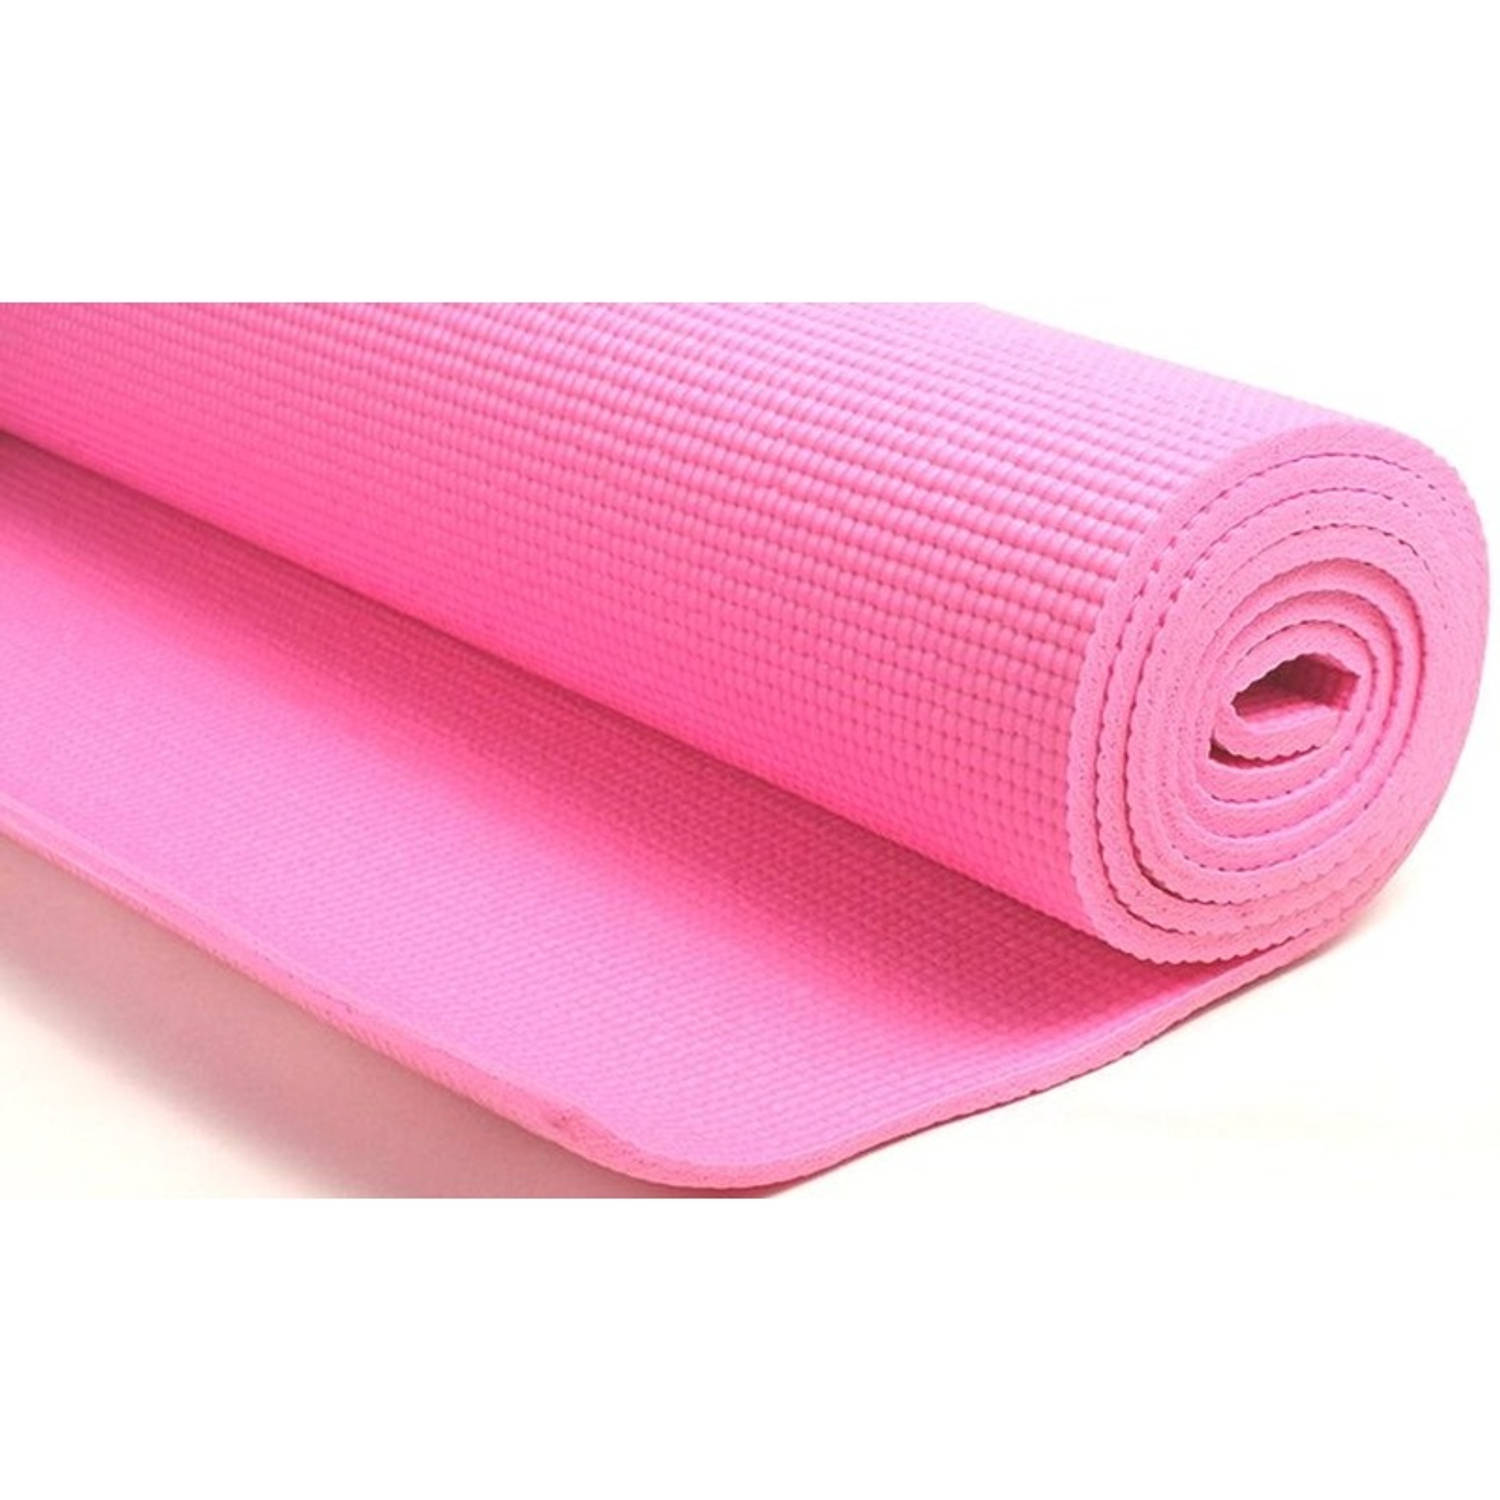 Roze Yogamat-sportmat 180 X 60 Cm Sportmatten Voor O.a. Yoga, Pilates En Fitness